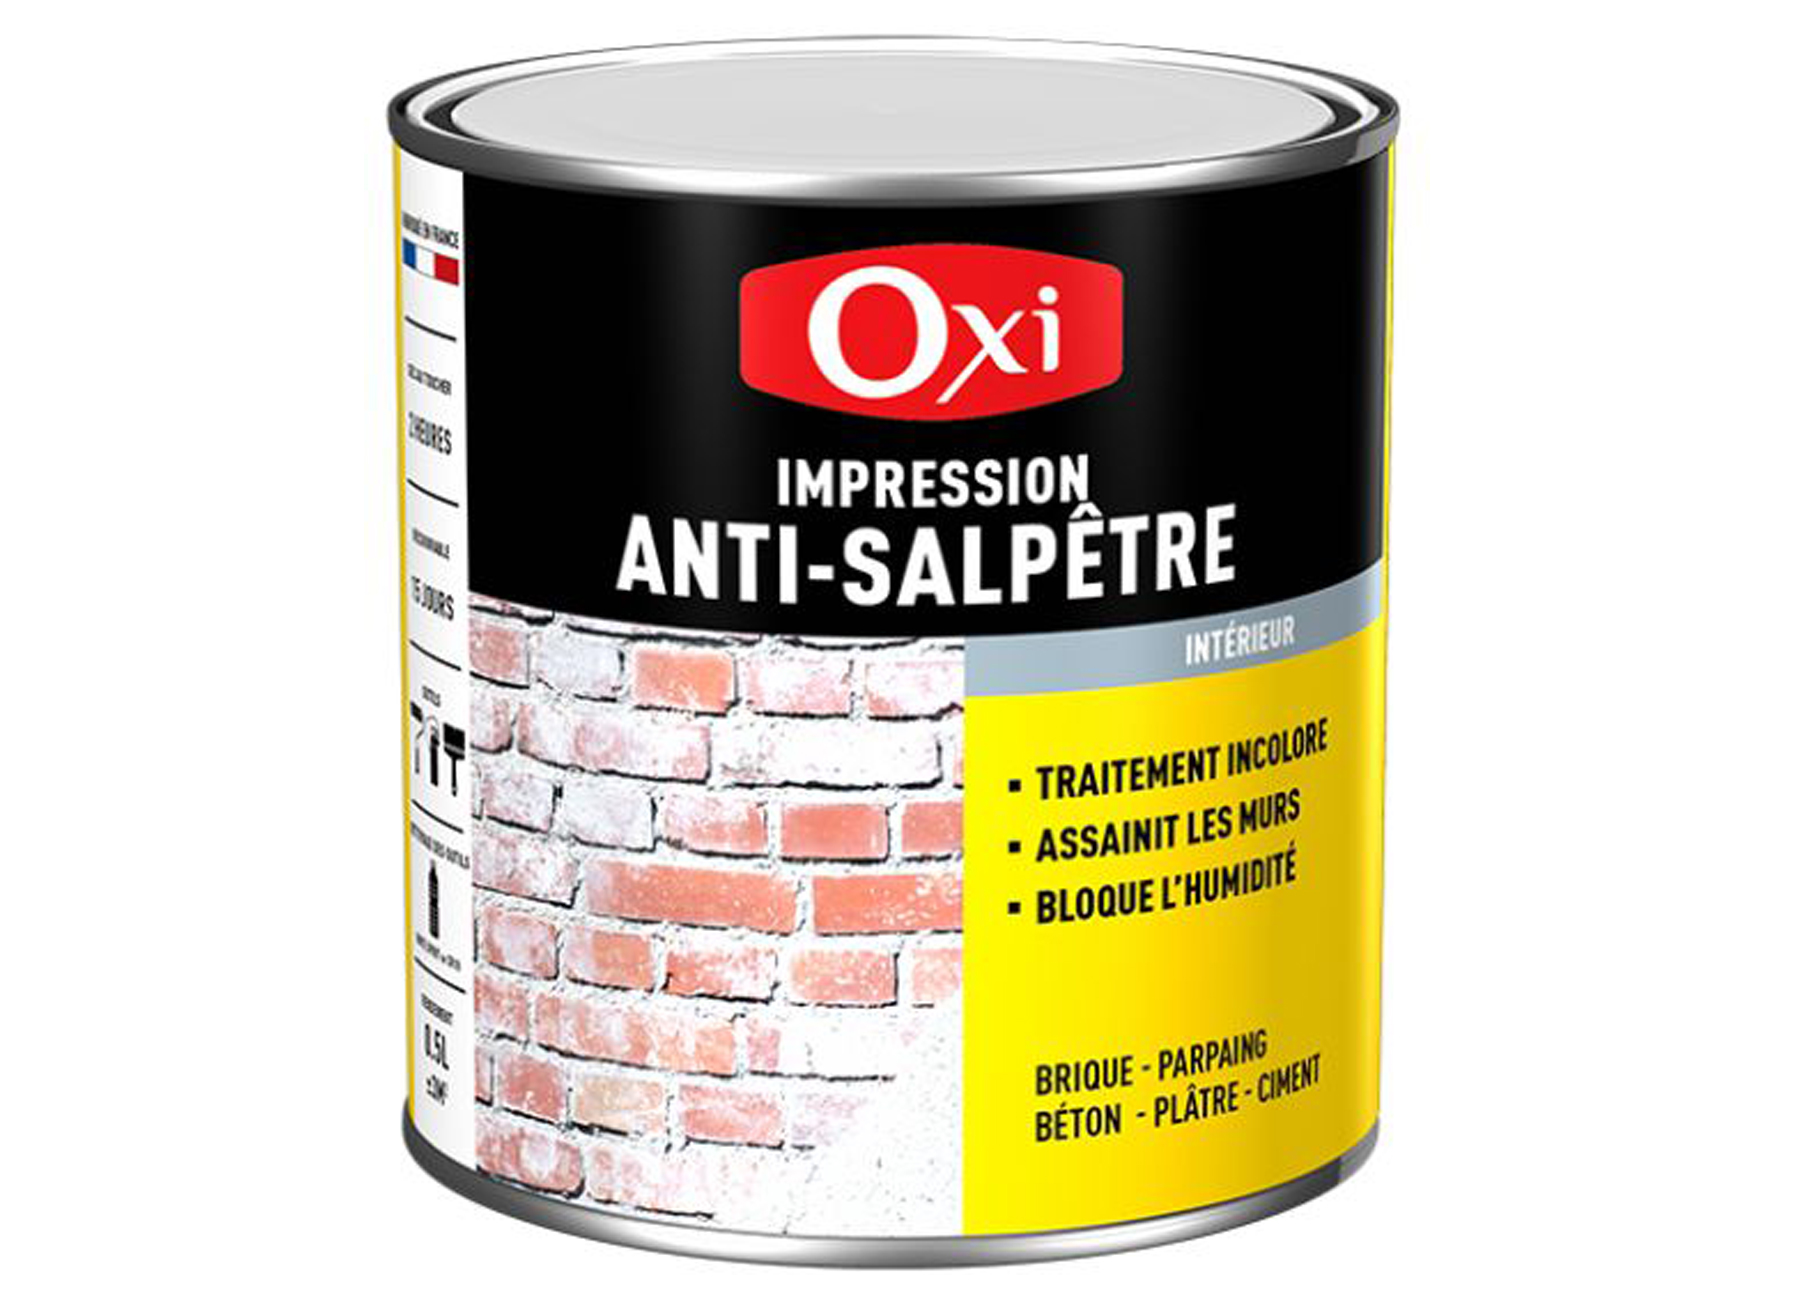 OXI IMPRESSION ANTI-SALPETRE